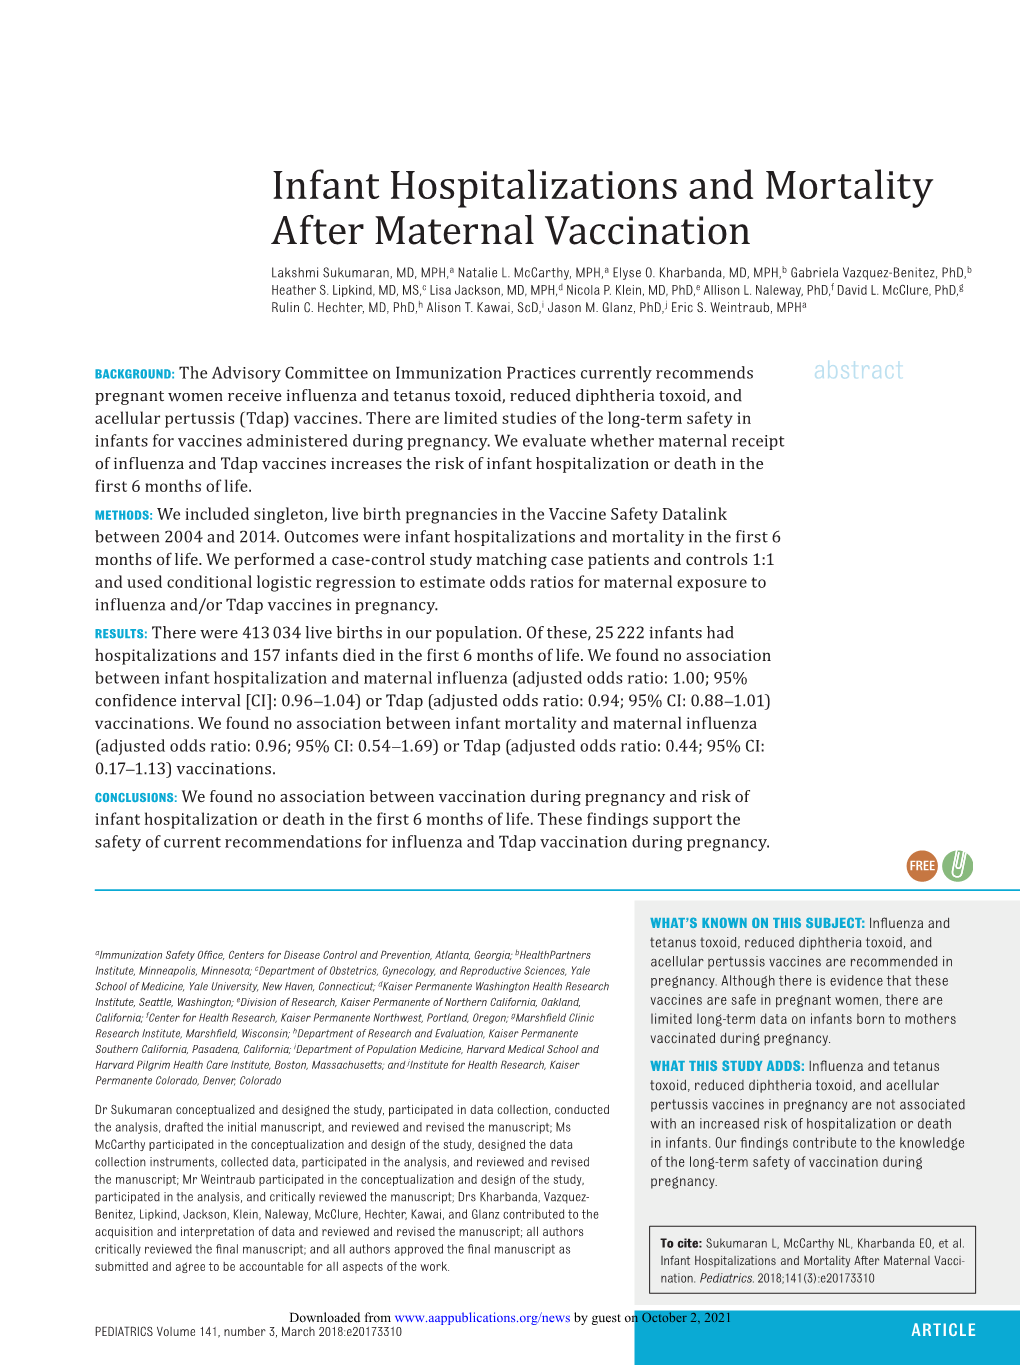 Infant Hospitalizations and Mortality After Maternal Vaccination Lakshmi Sukumaran, Natalie L